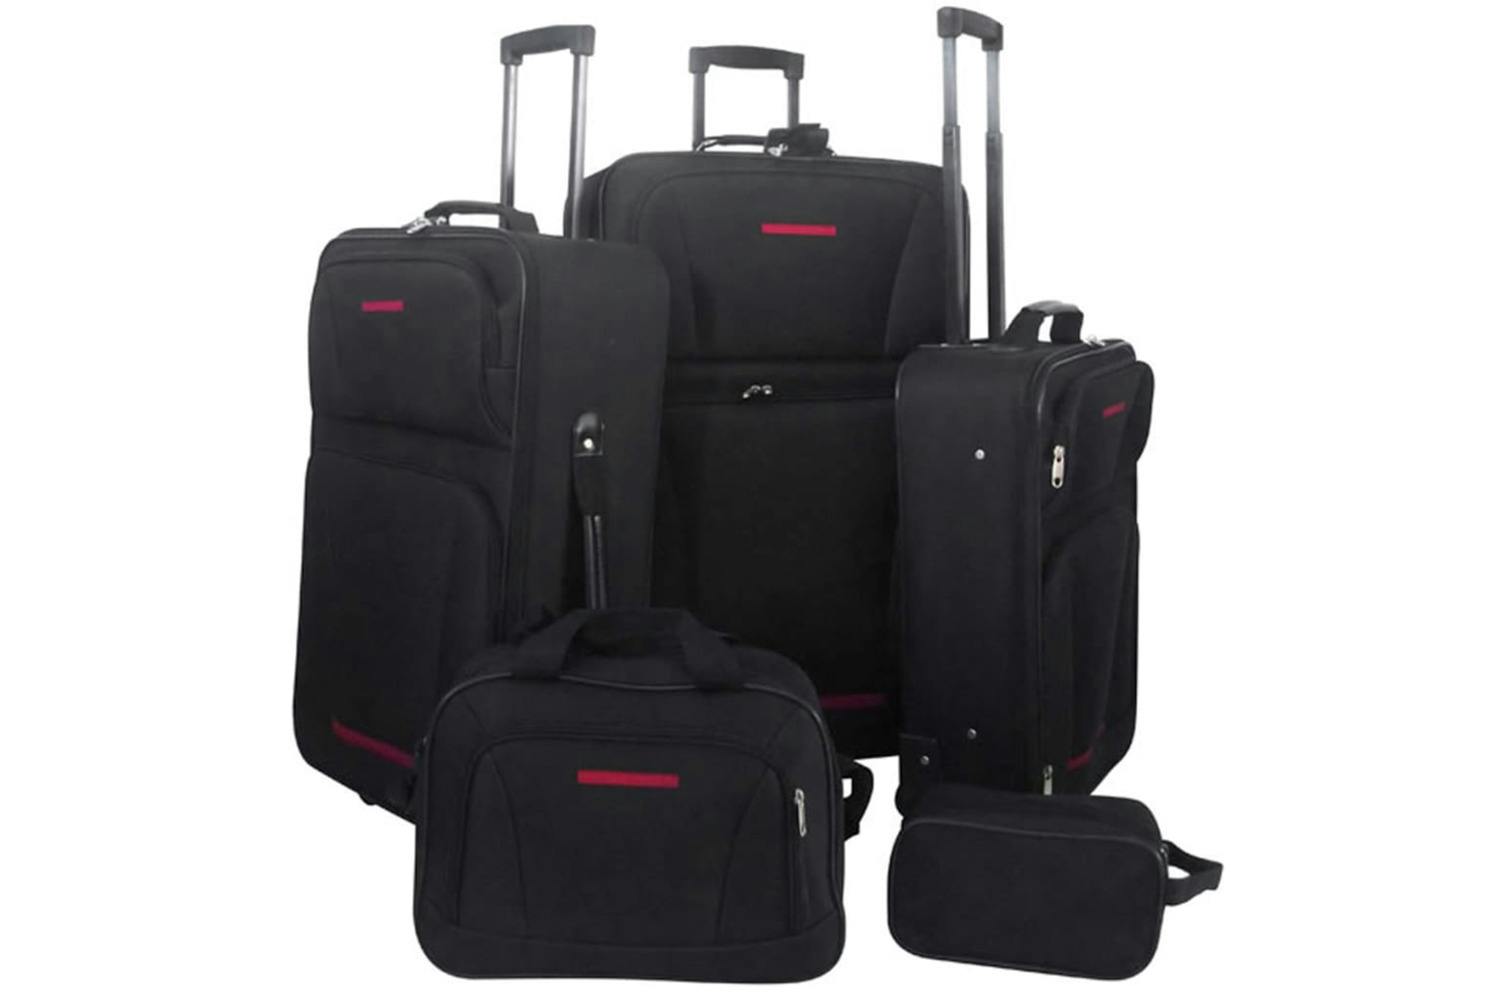 VidaXL 90154 Five Piece Travel Luggage Set | Black